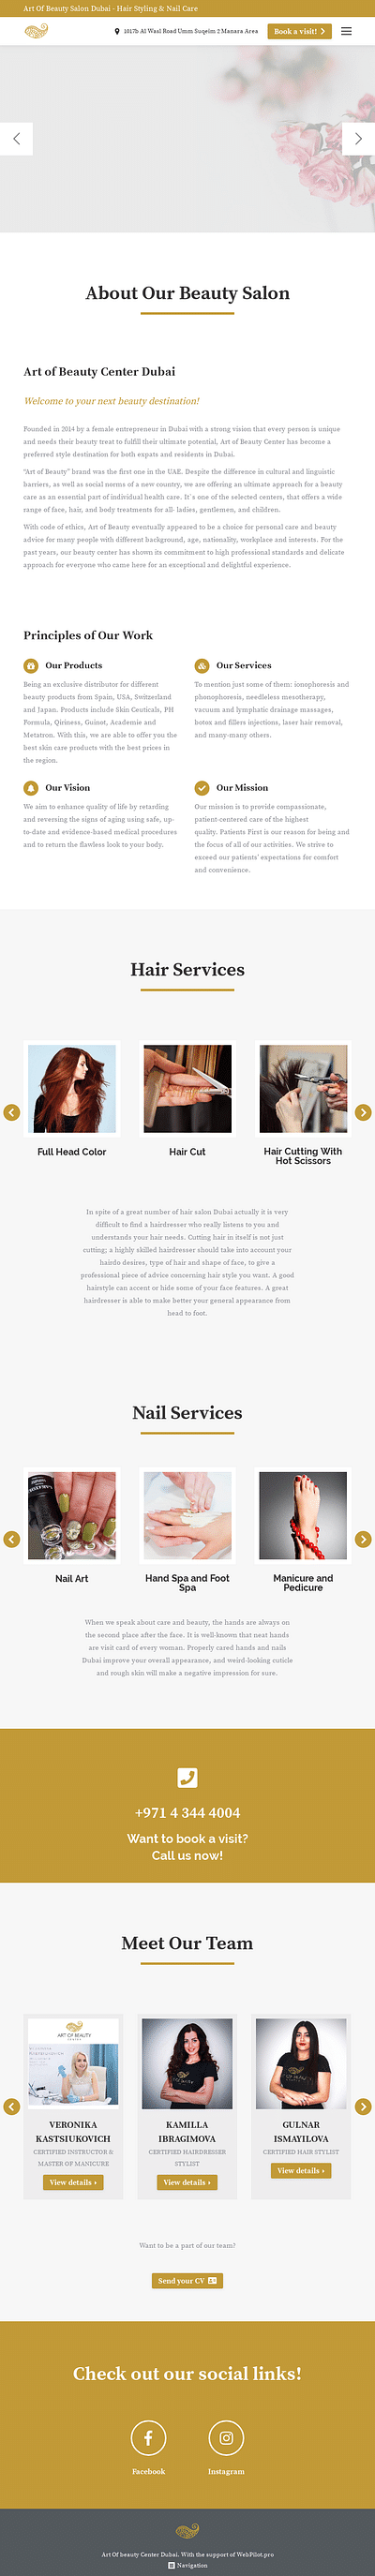 nails and hair artofbeautycenter - Création de site internet